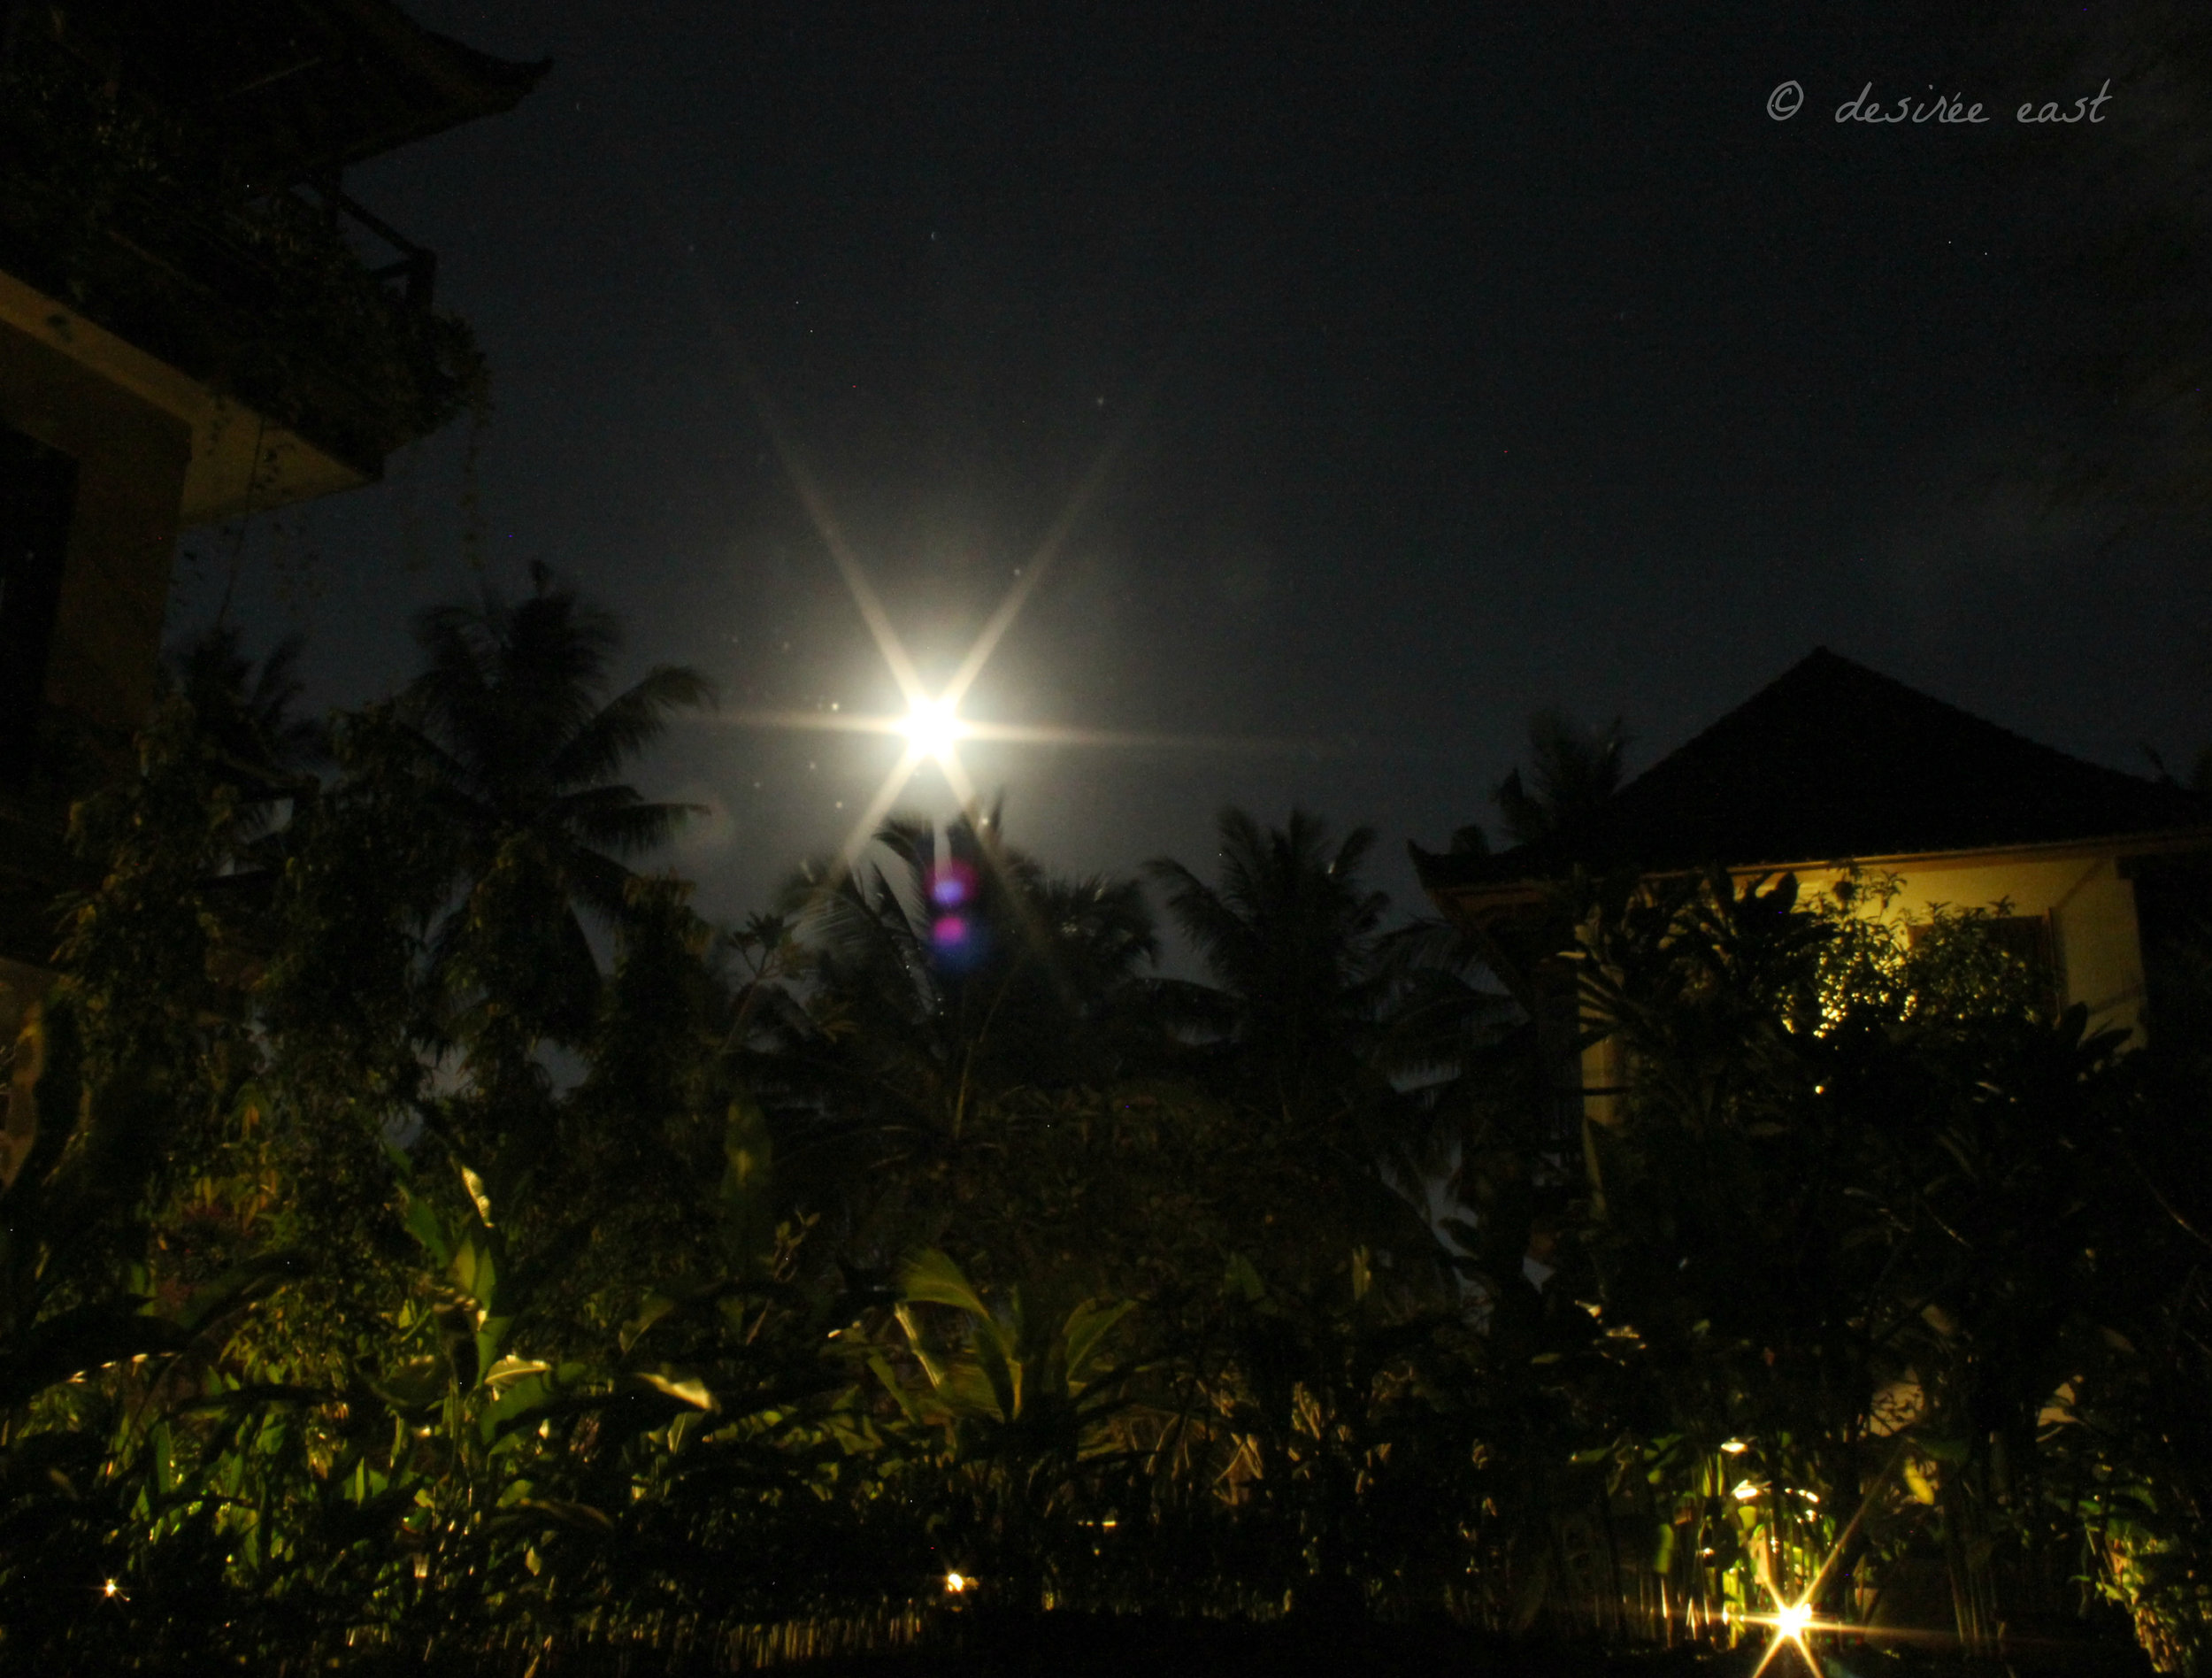 moonlit balinese night. ubud, bali, indonesia. photo by desiree east